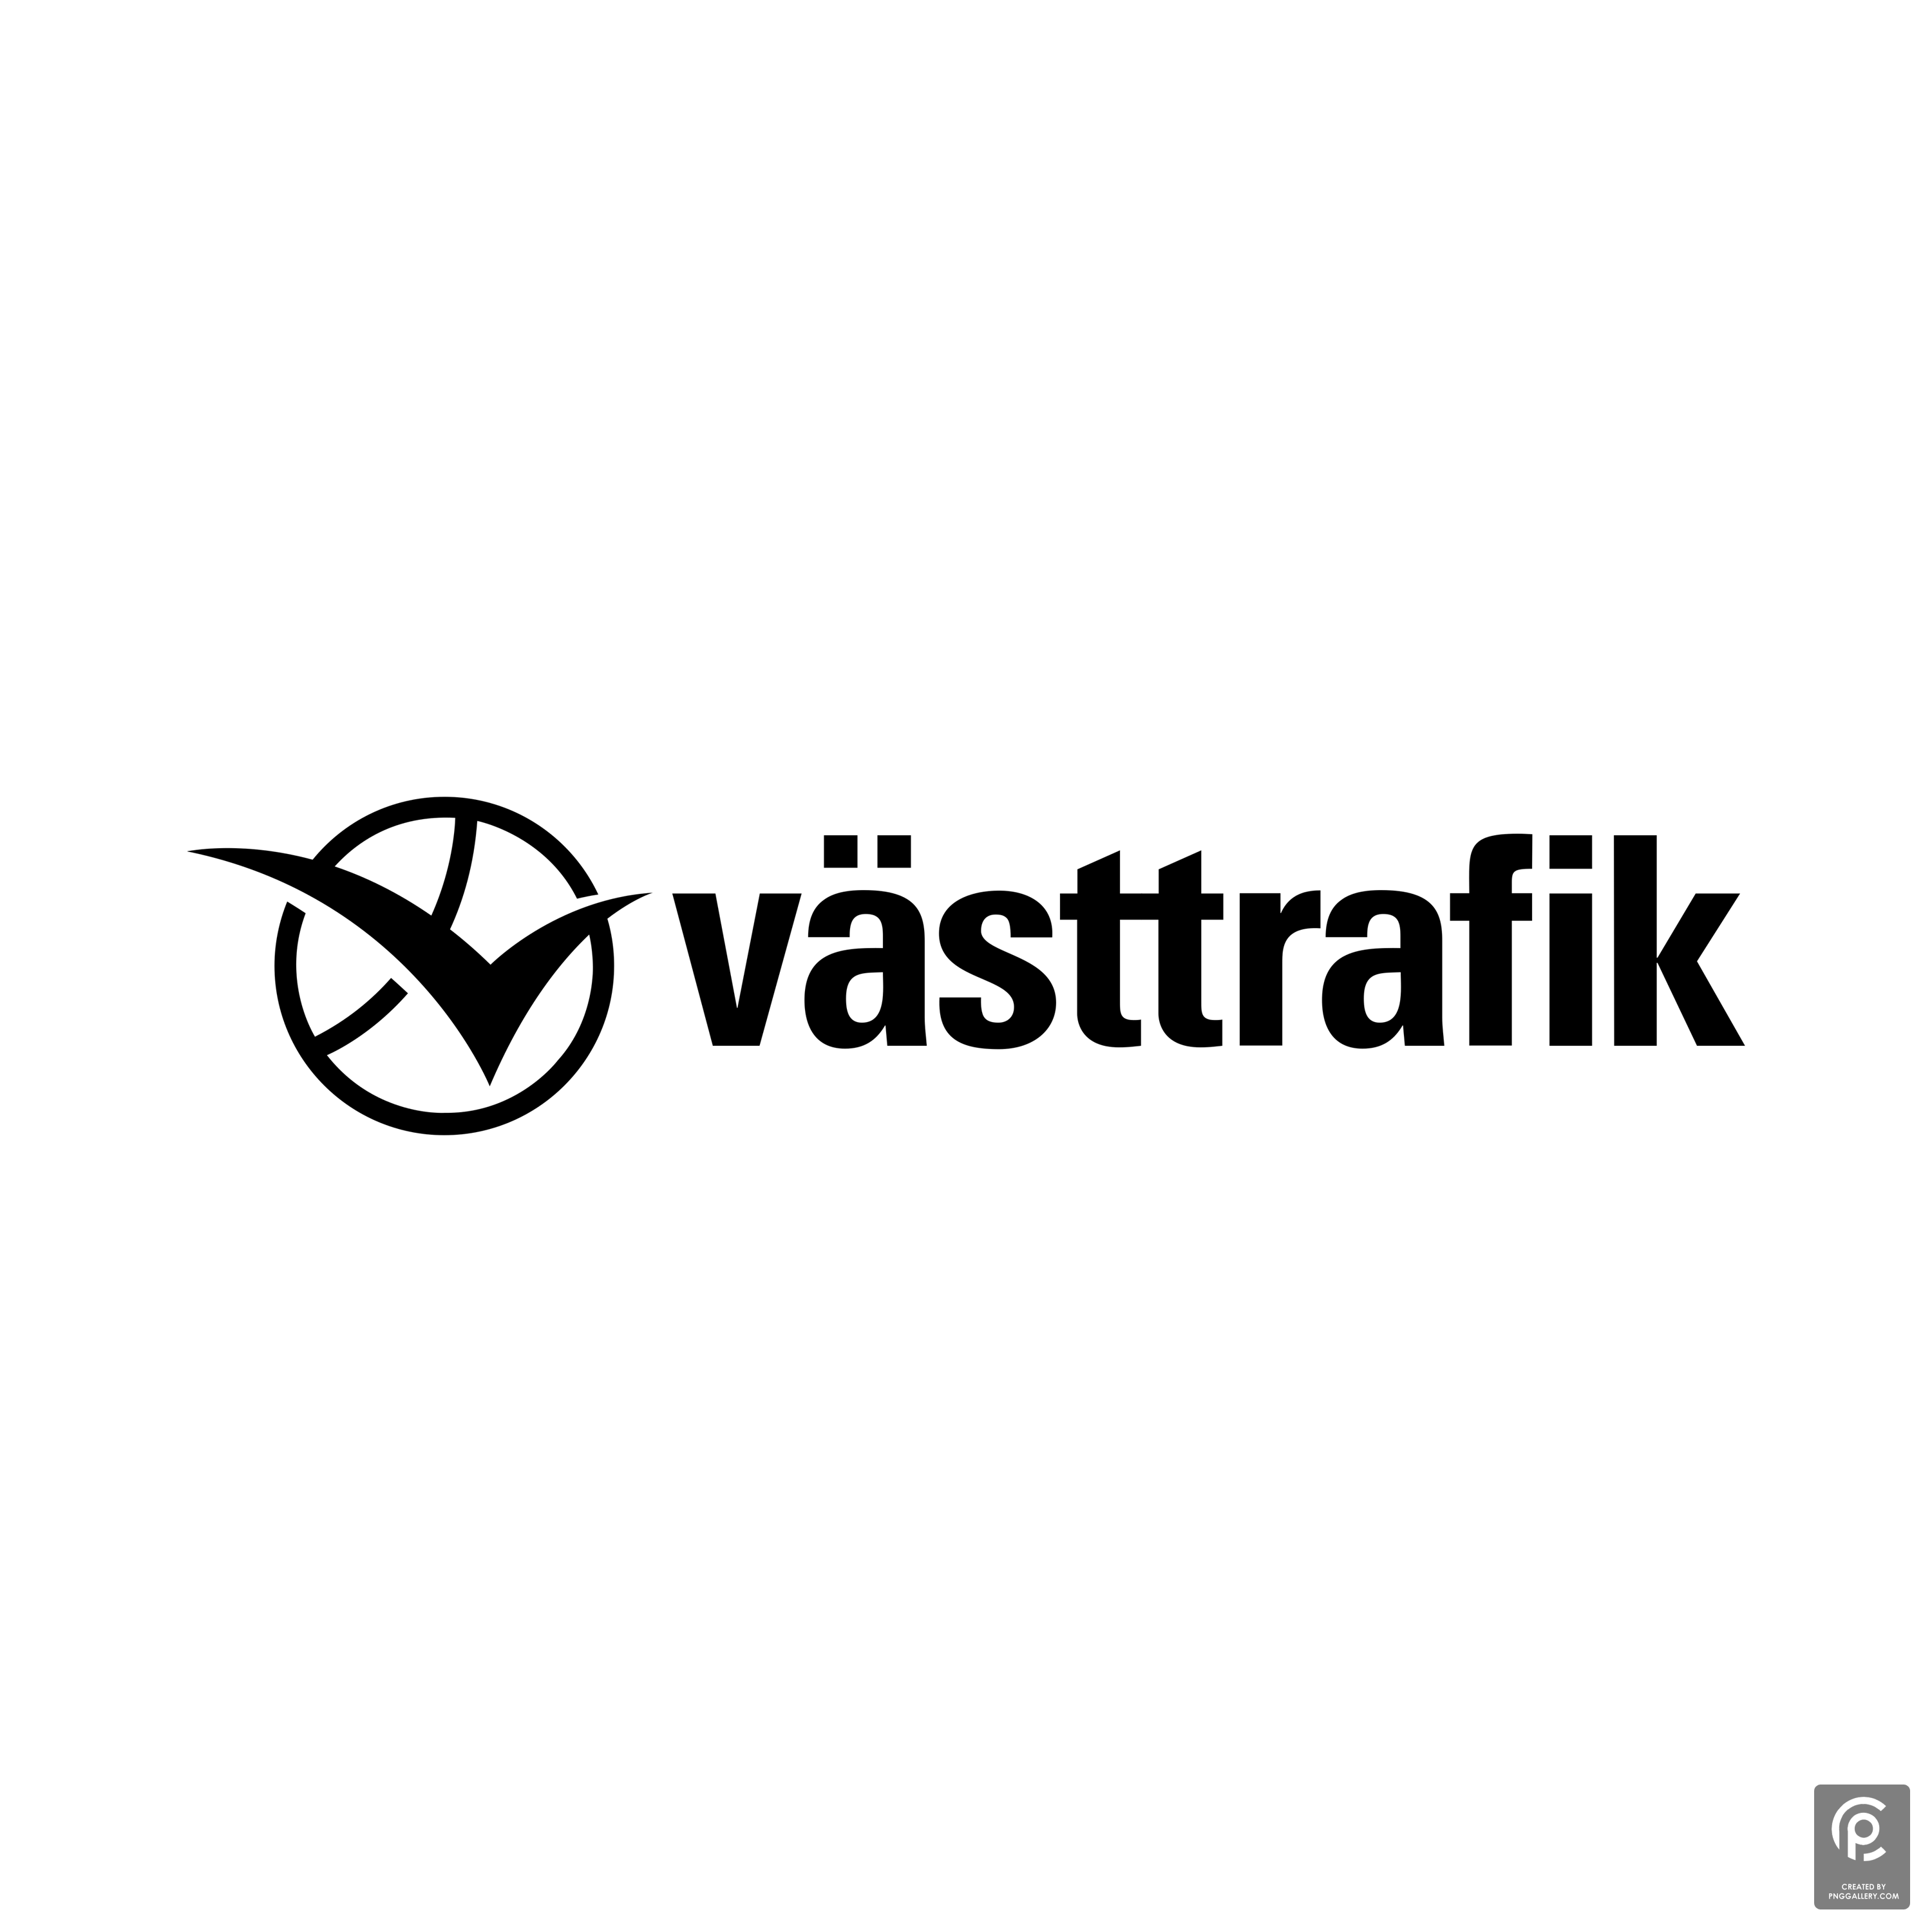 Vasttrafik Logo Transparent Gallery